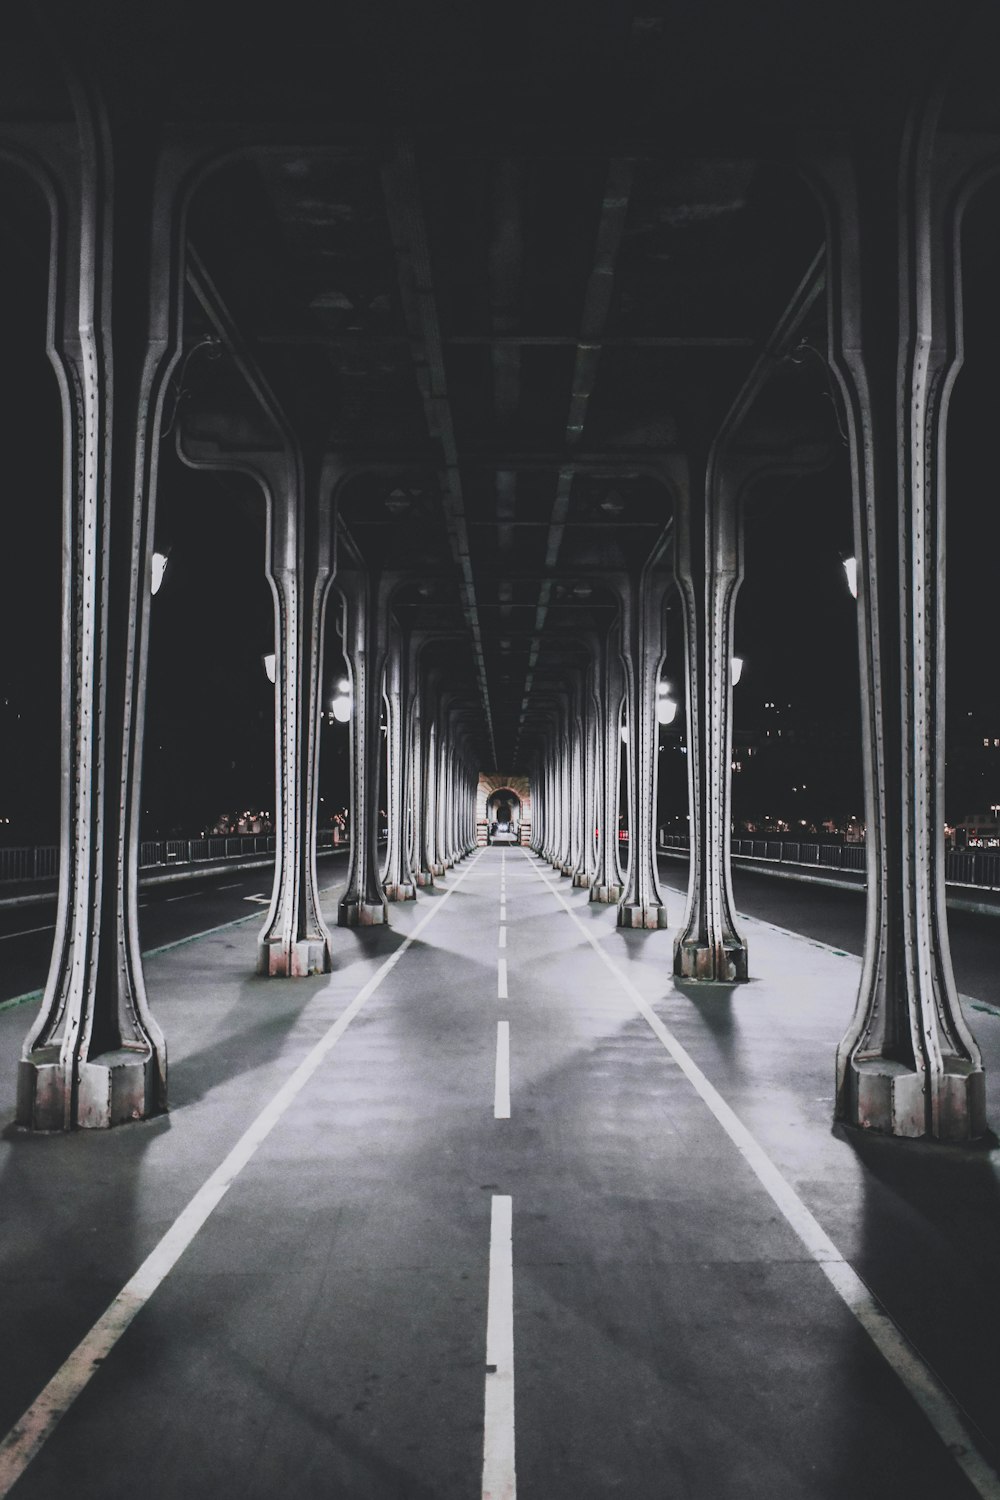 strada vuota durante la notte